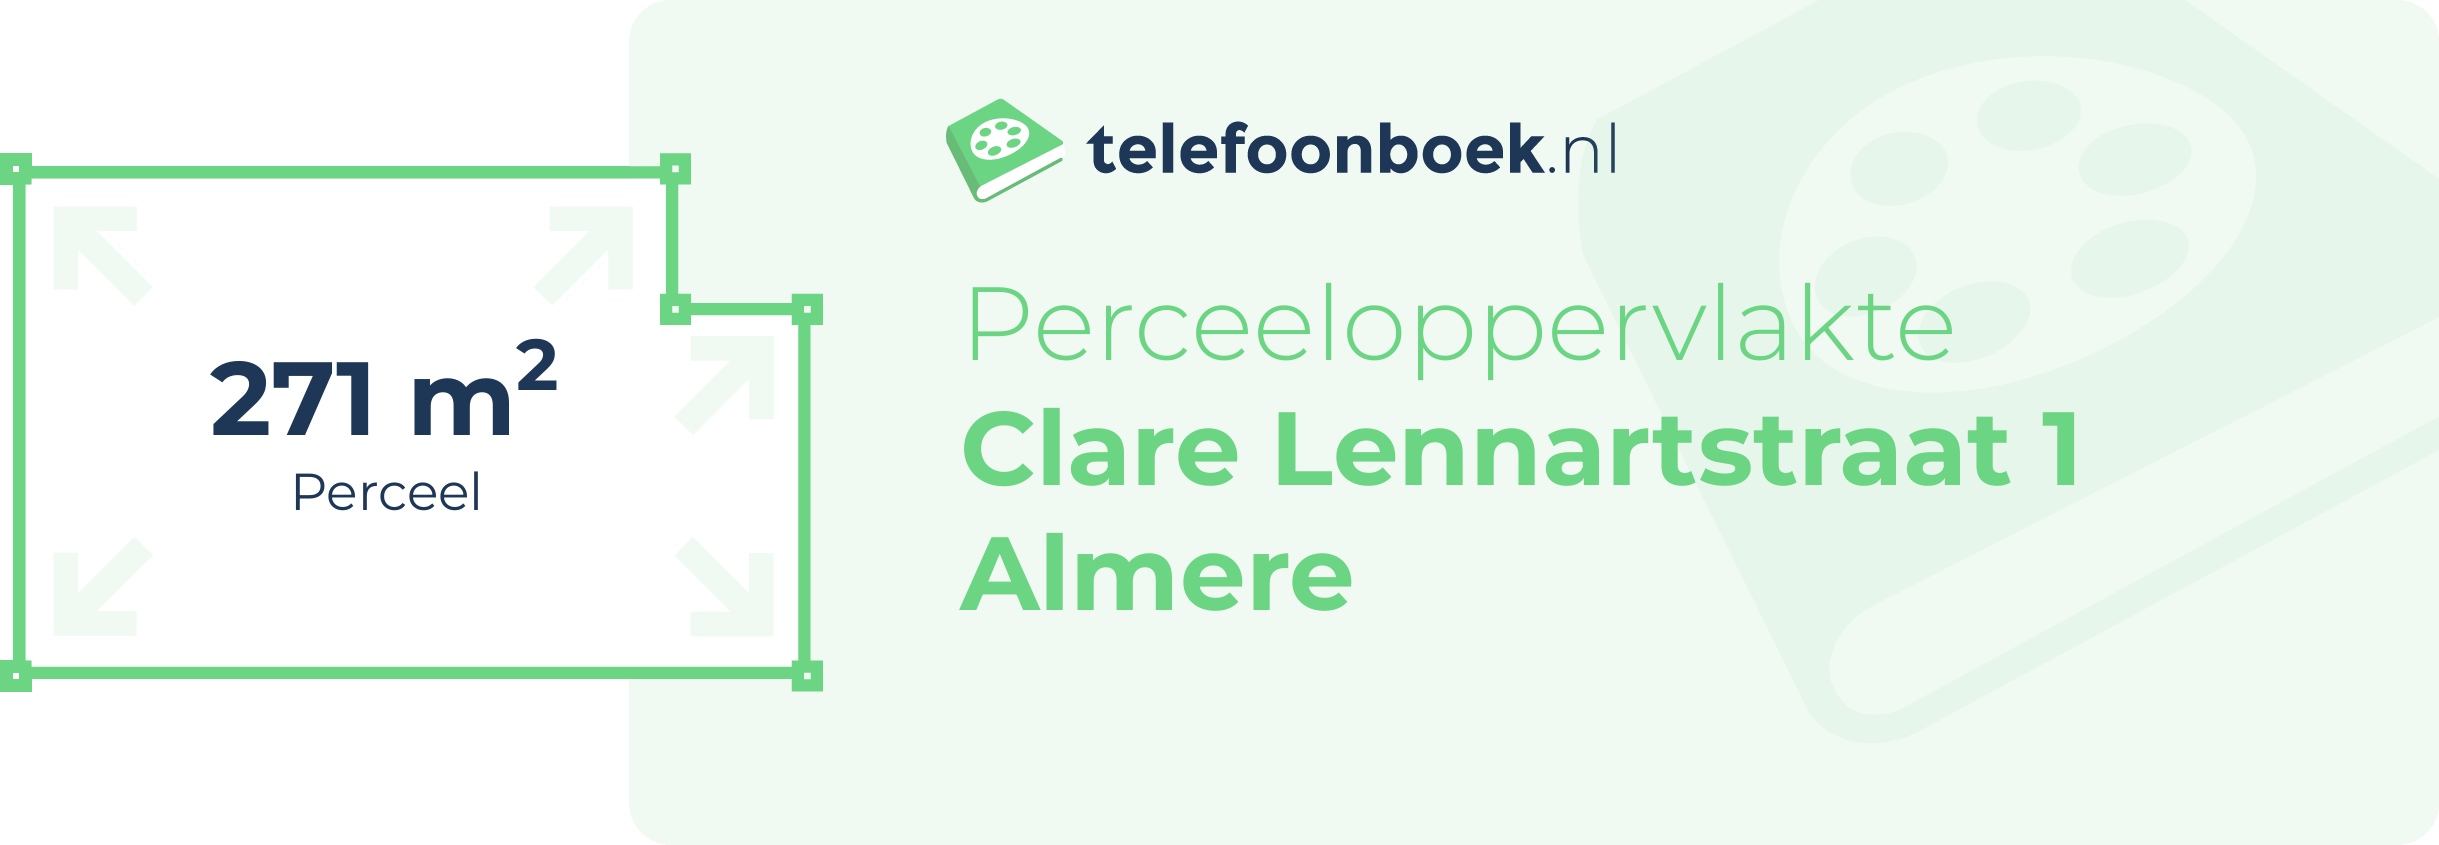 Perceeloppervlakte Clare Lennartstraat 1 Almere